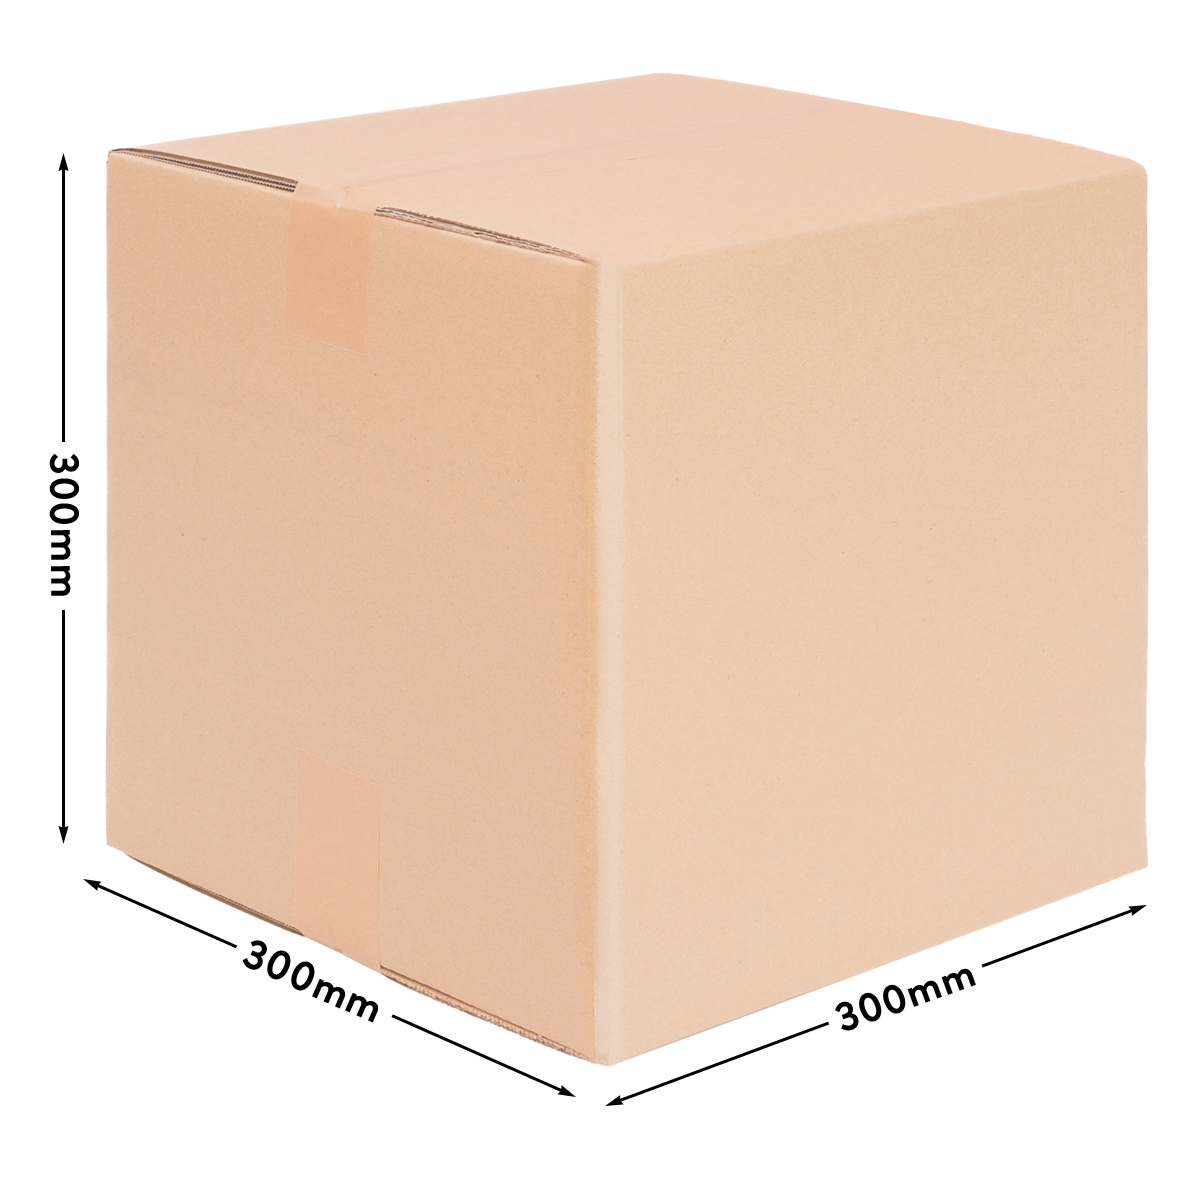 Cardboard box, double wall, 300x300x300 mm - KK 41